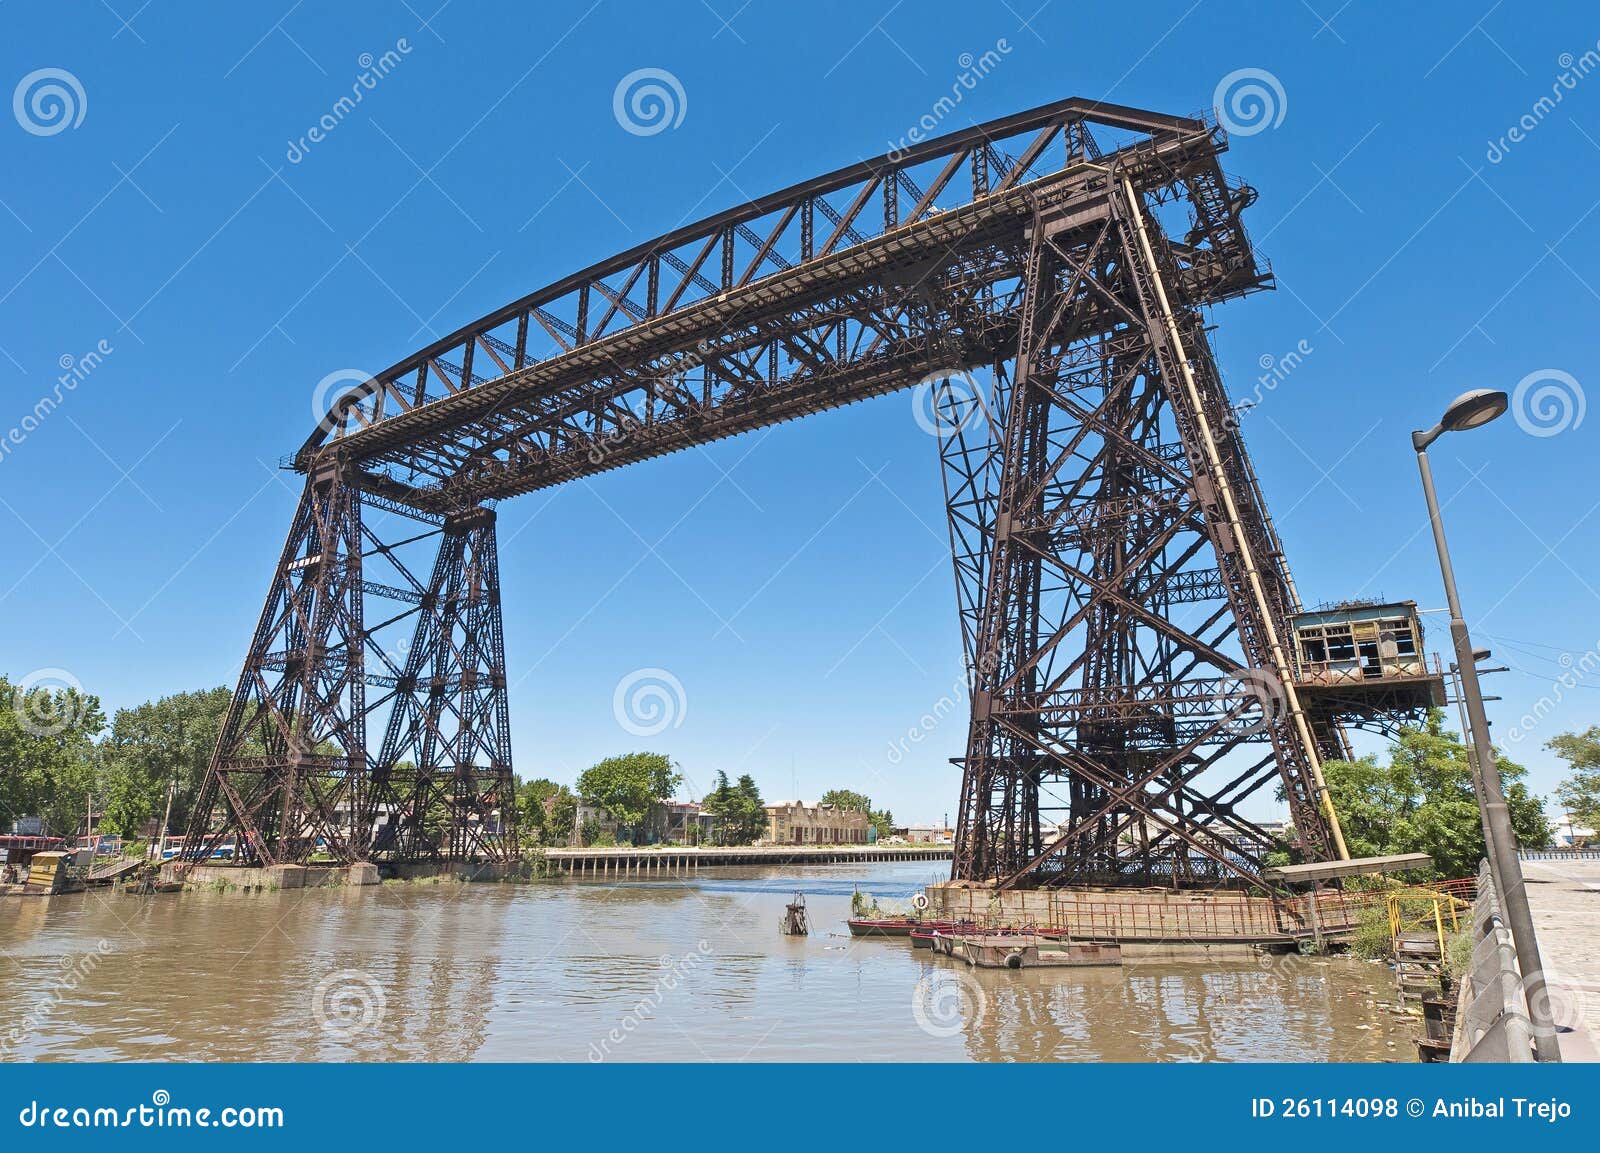 nicolas avellaneda steel bridge across riachuelo